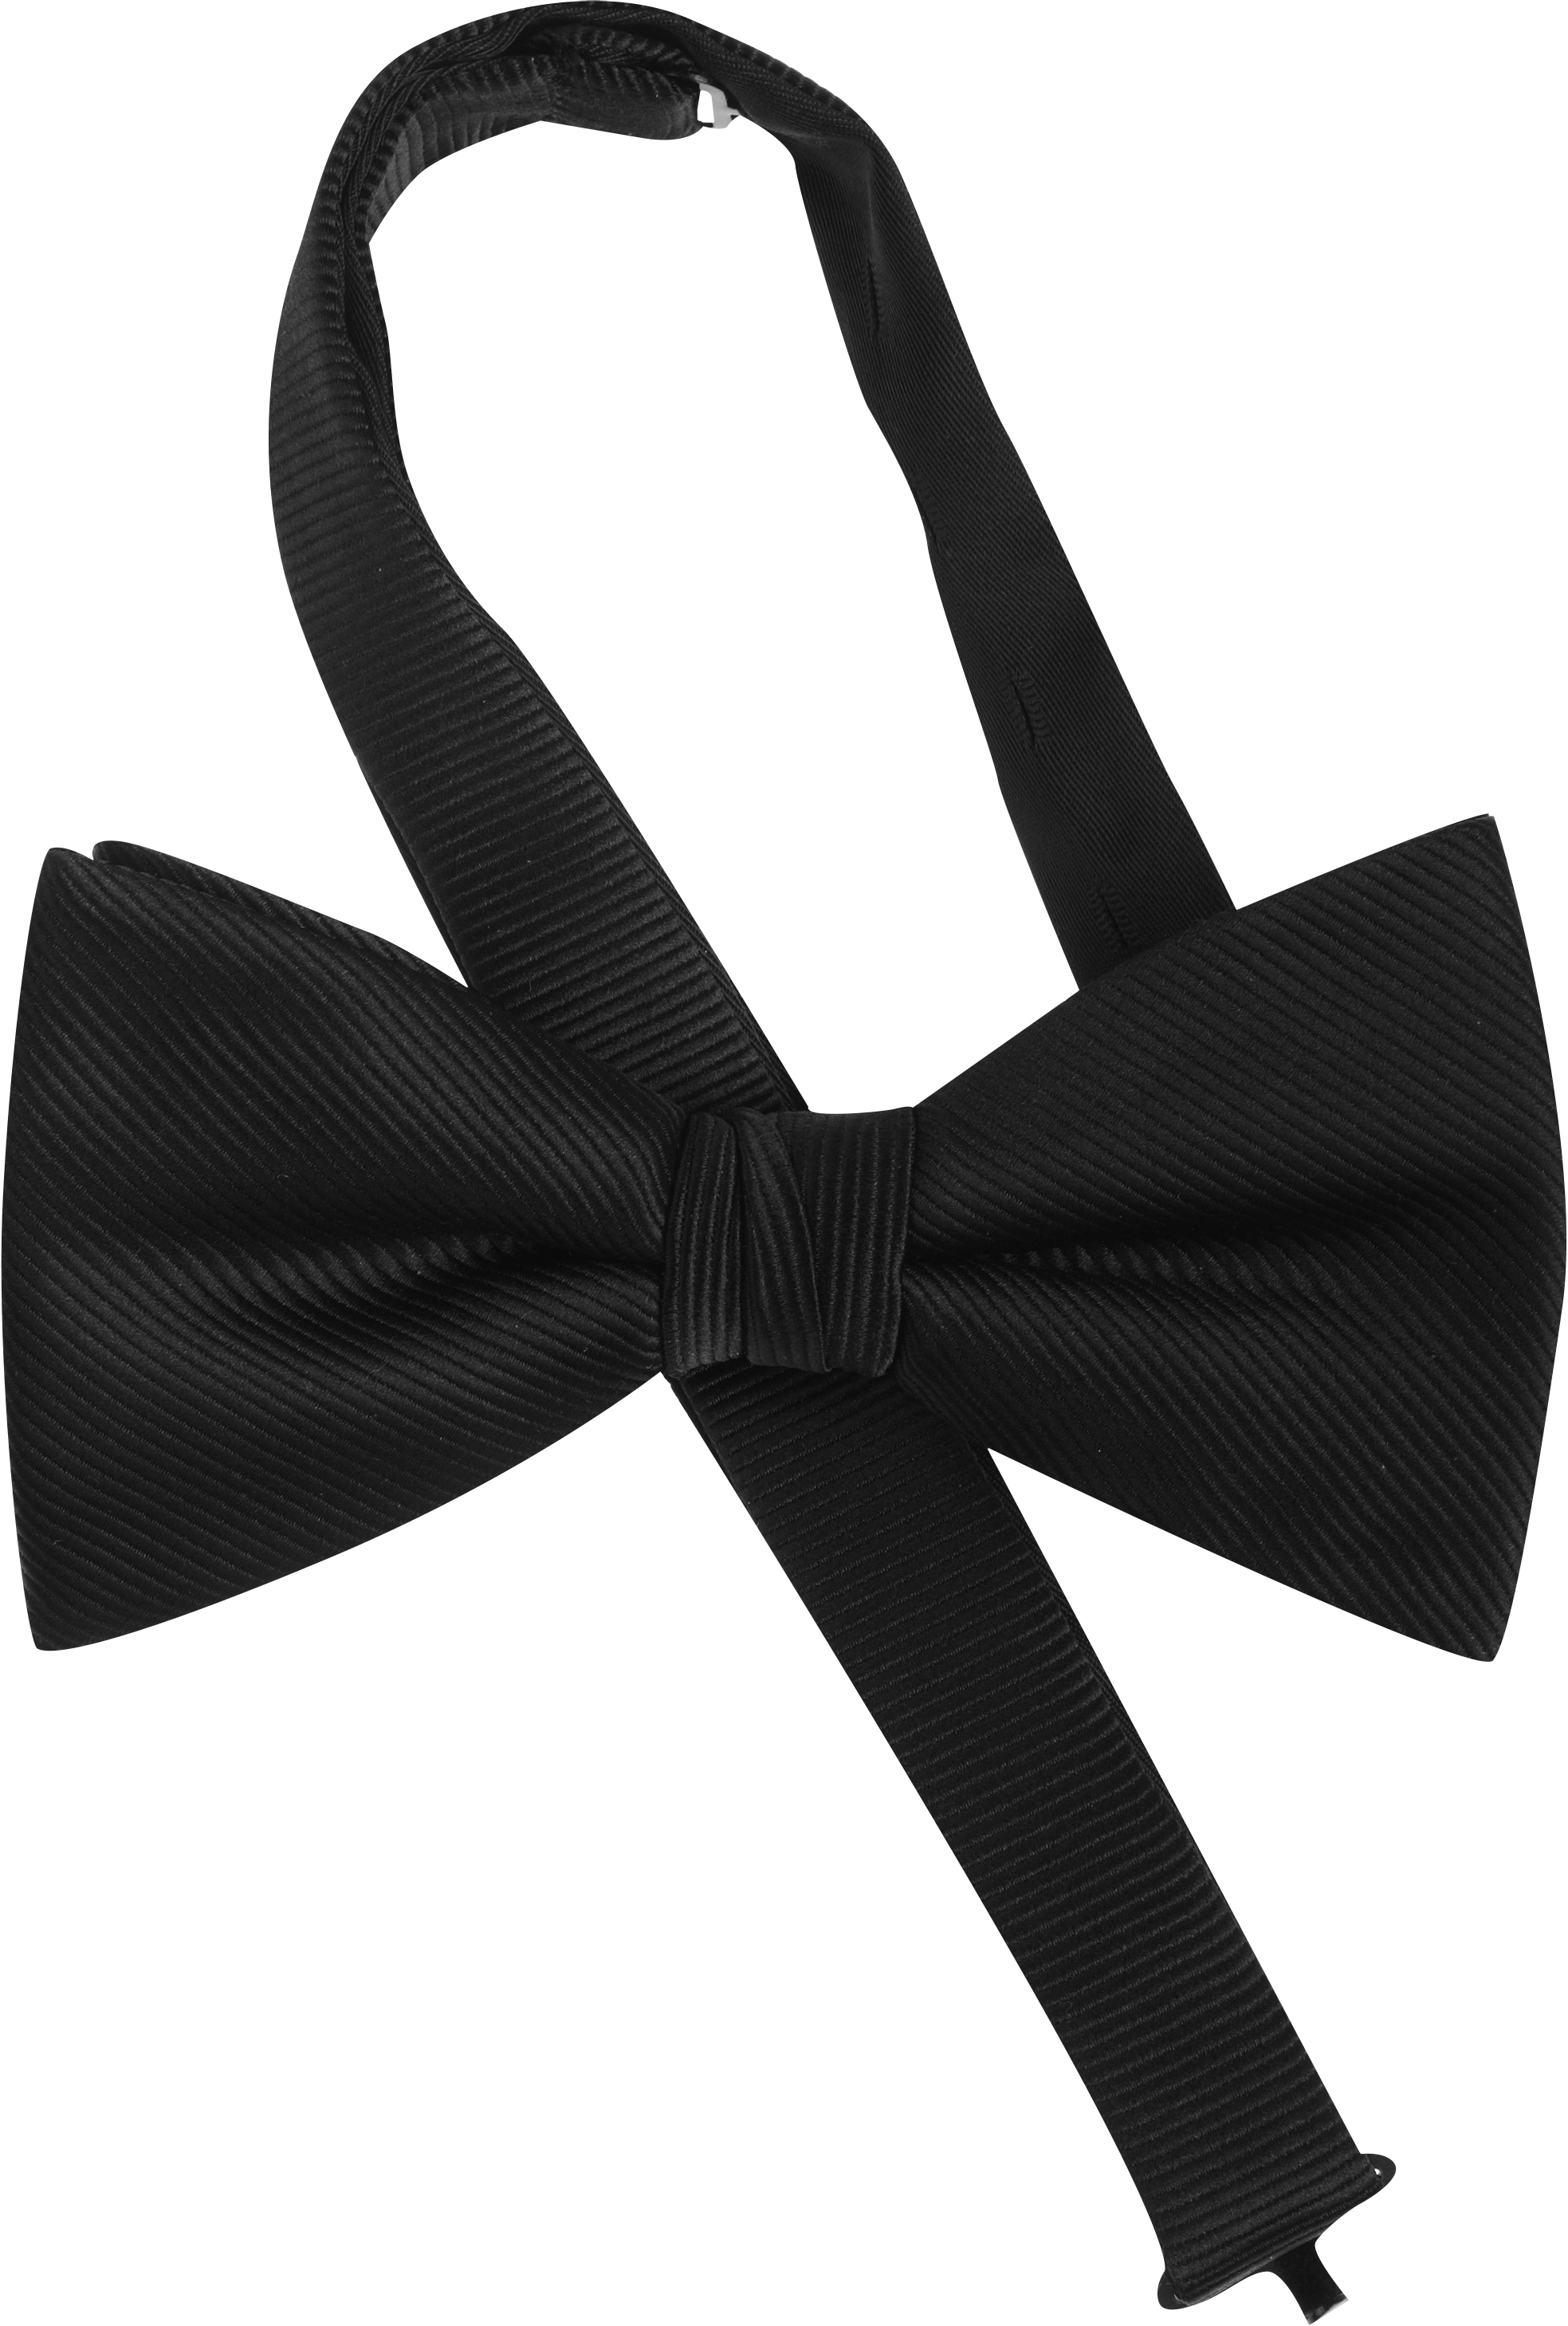 Grosgrain Bow Tie